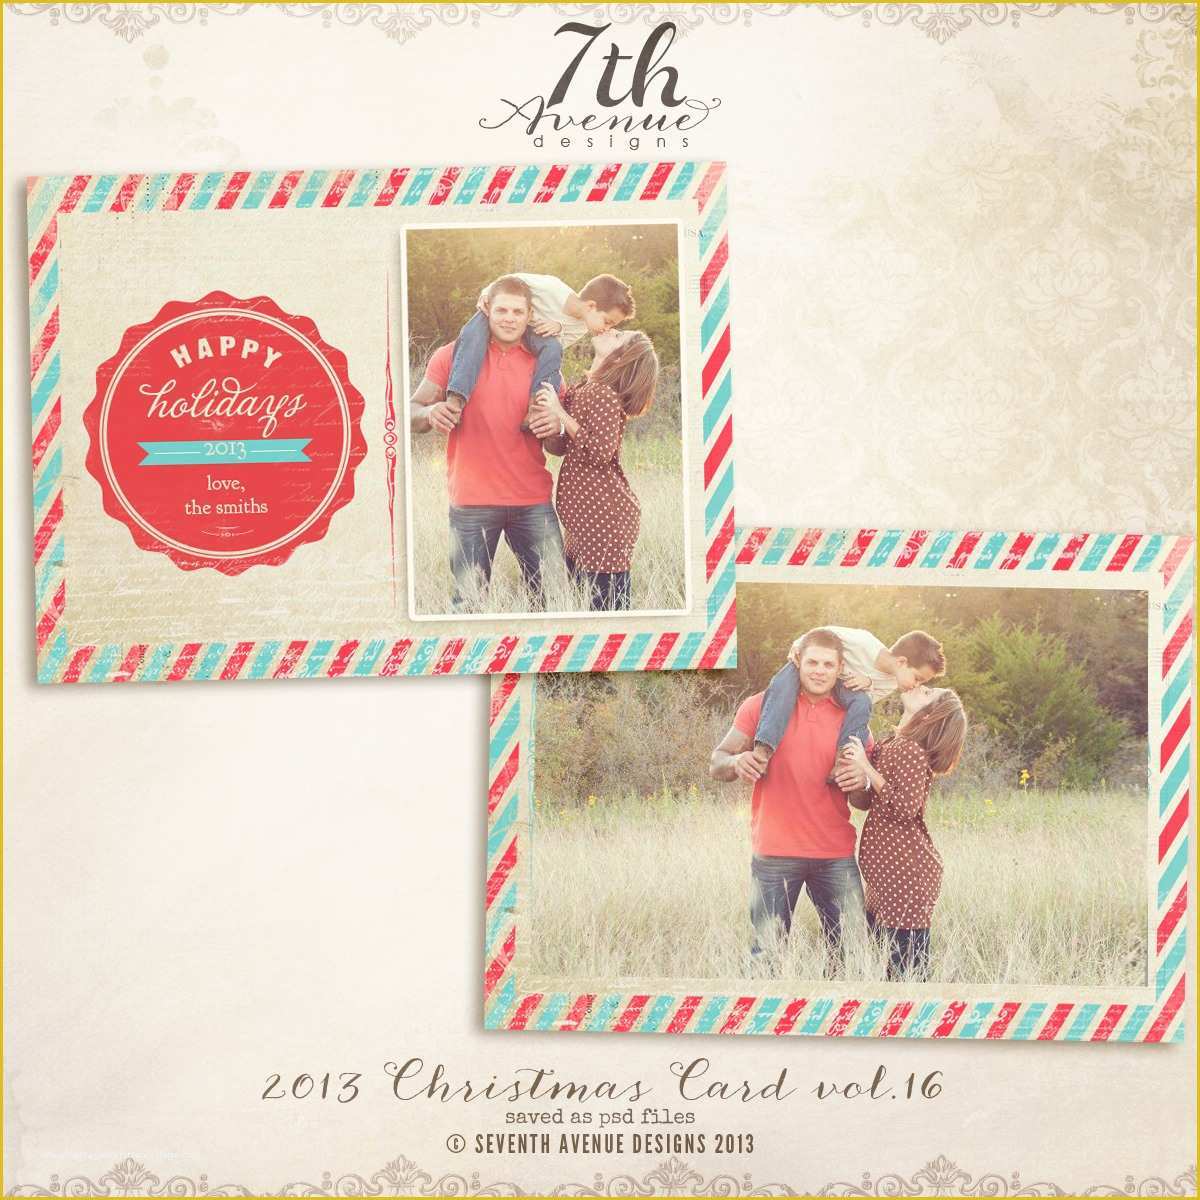 Free Photo Christmas Card Templates Of 2013 Christmas Card Templates Vol 16 [cc2013 16] $4 00